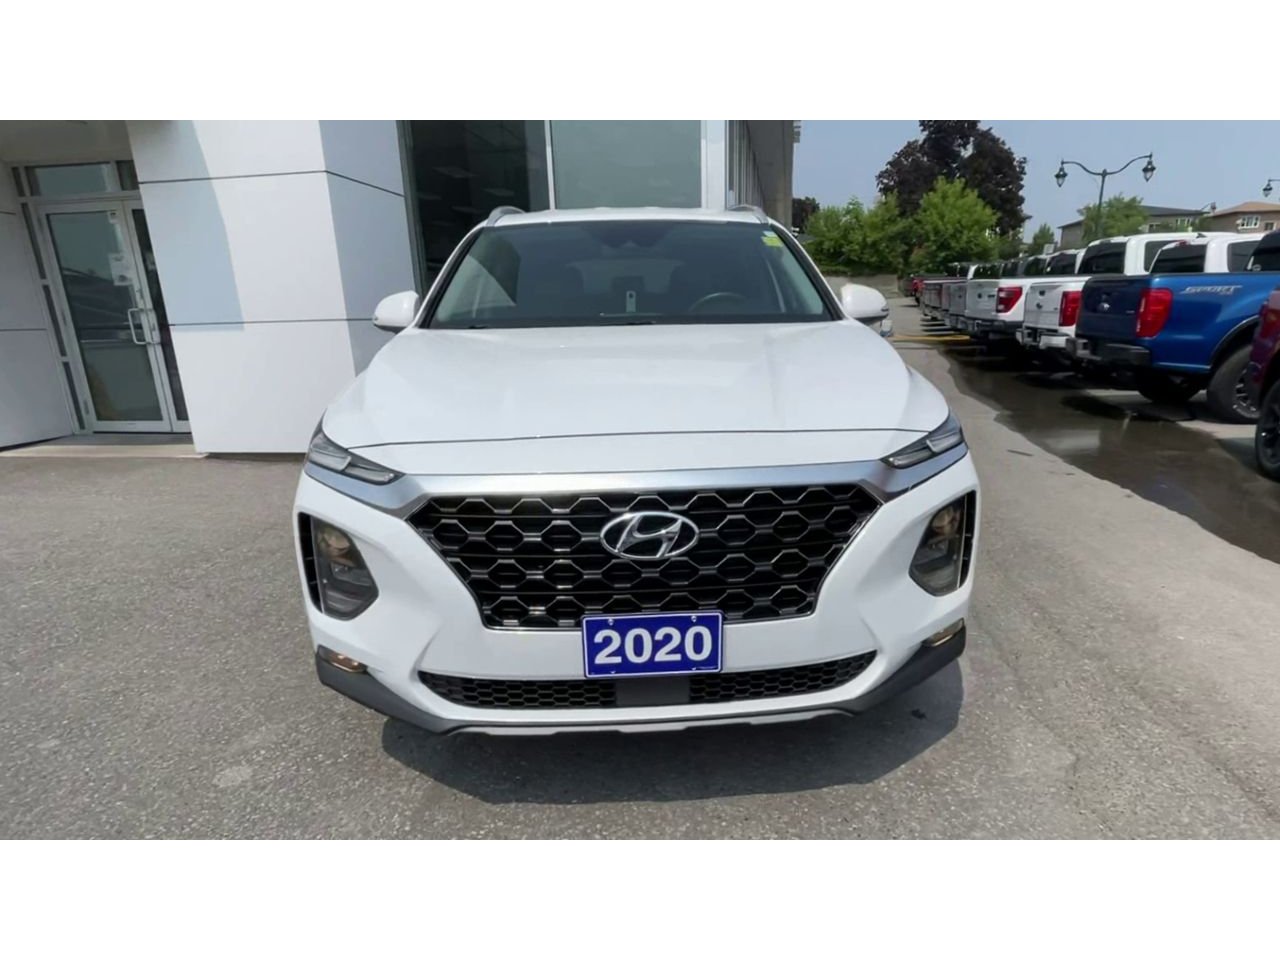 2020 Hyundai Santa Fe - 21061A Full Image 3